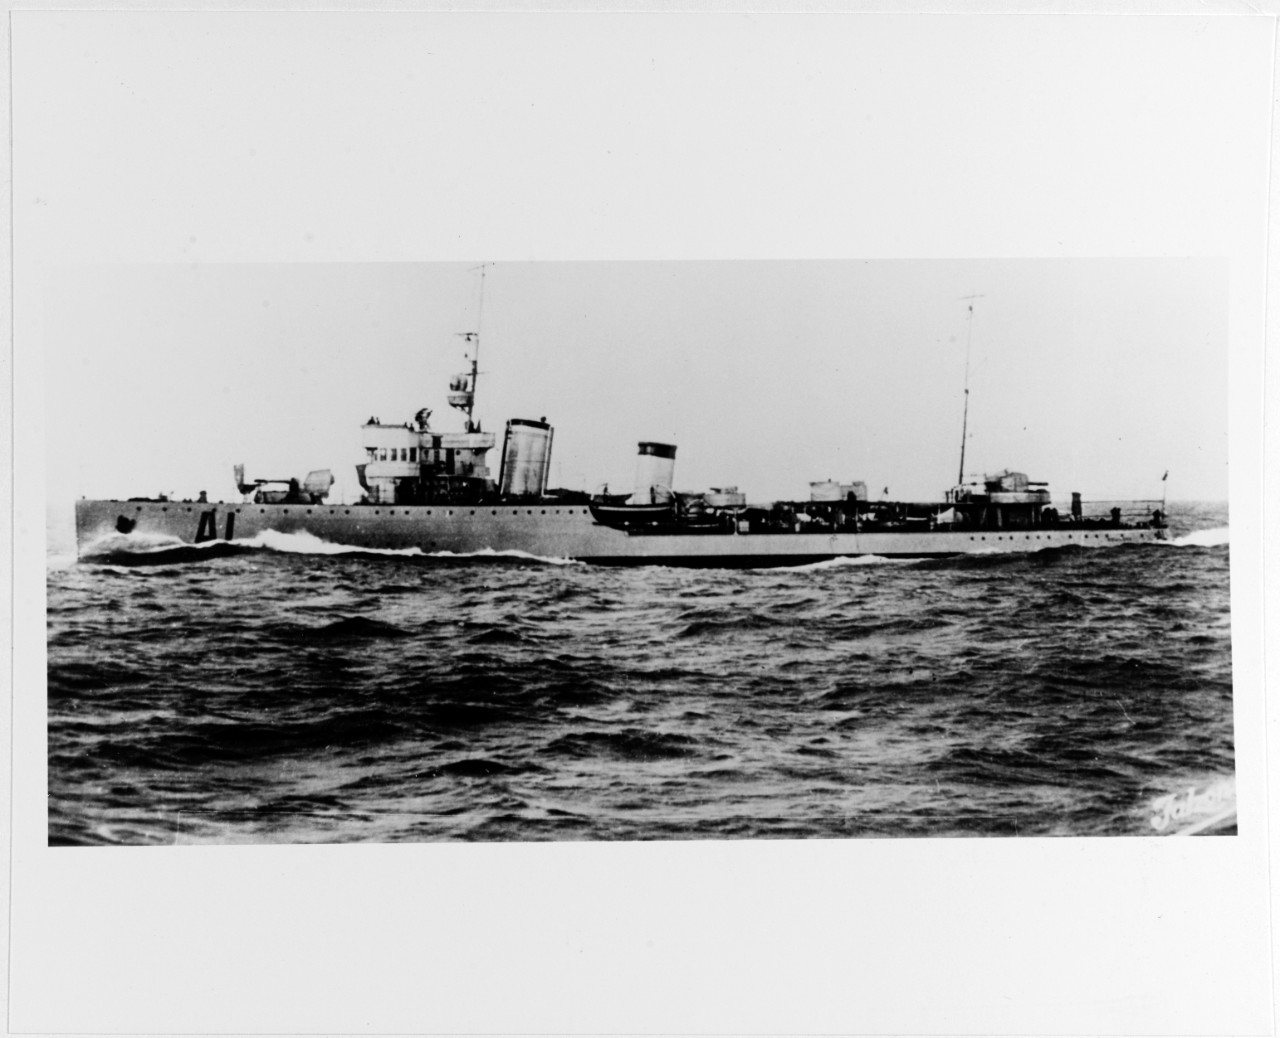 AQUILONE (Italian destroyer, 1927-1940)